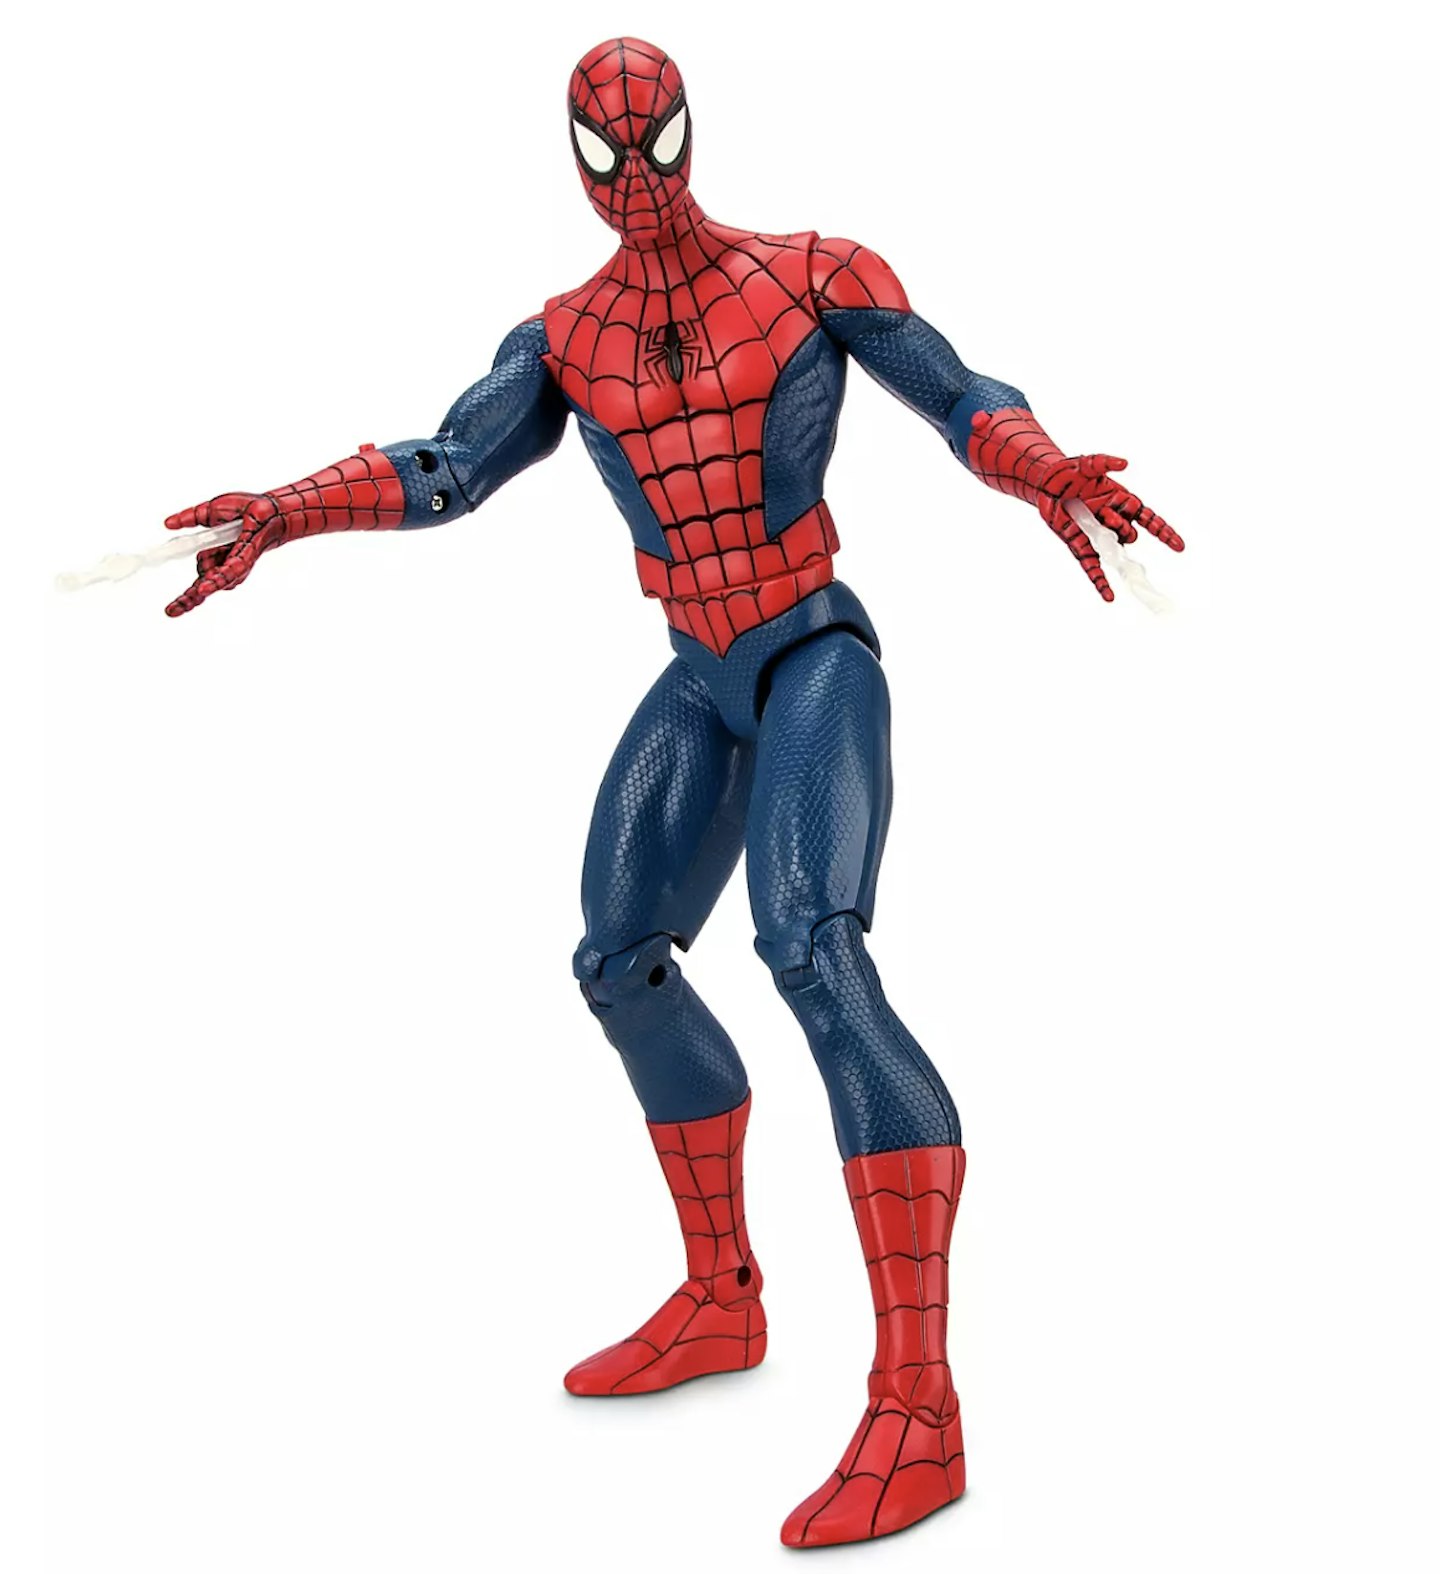 Disney Store Spider-Man Talking Action Figure